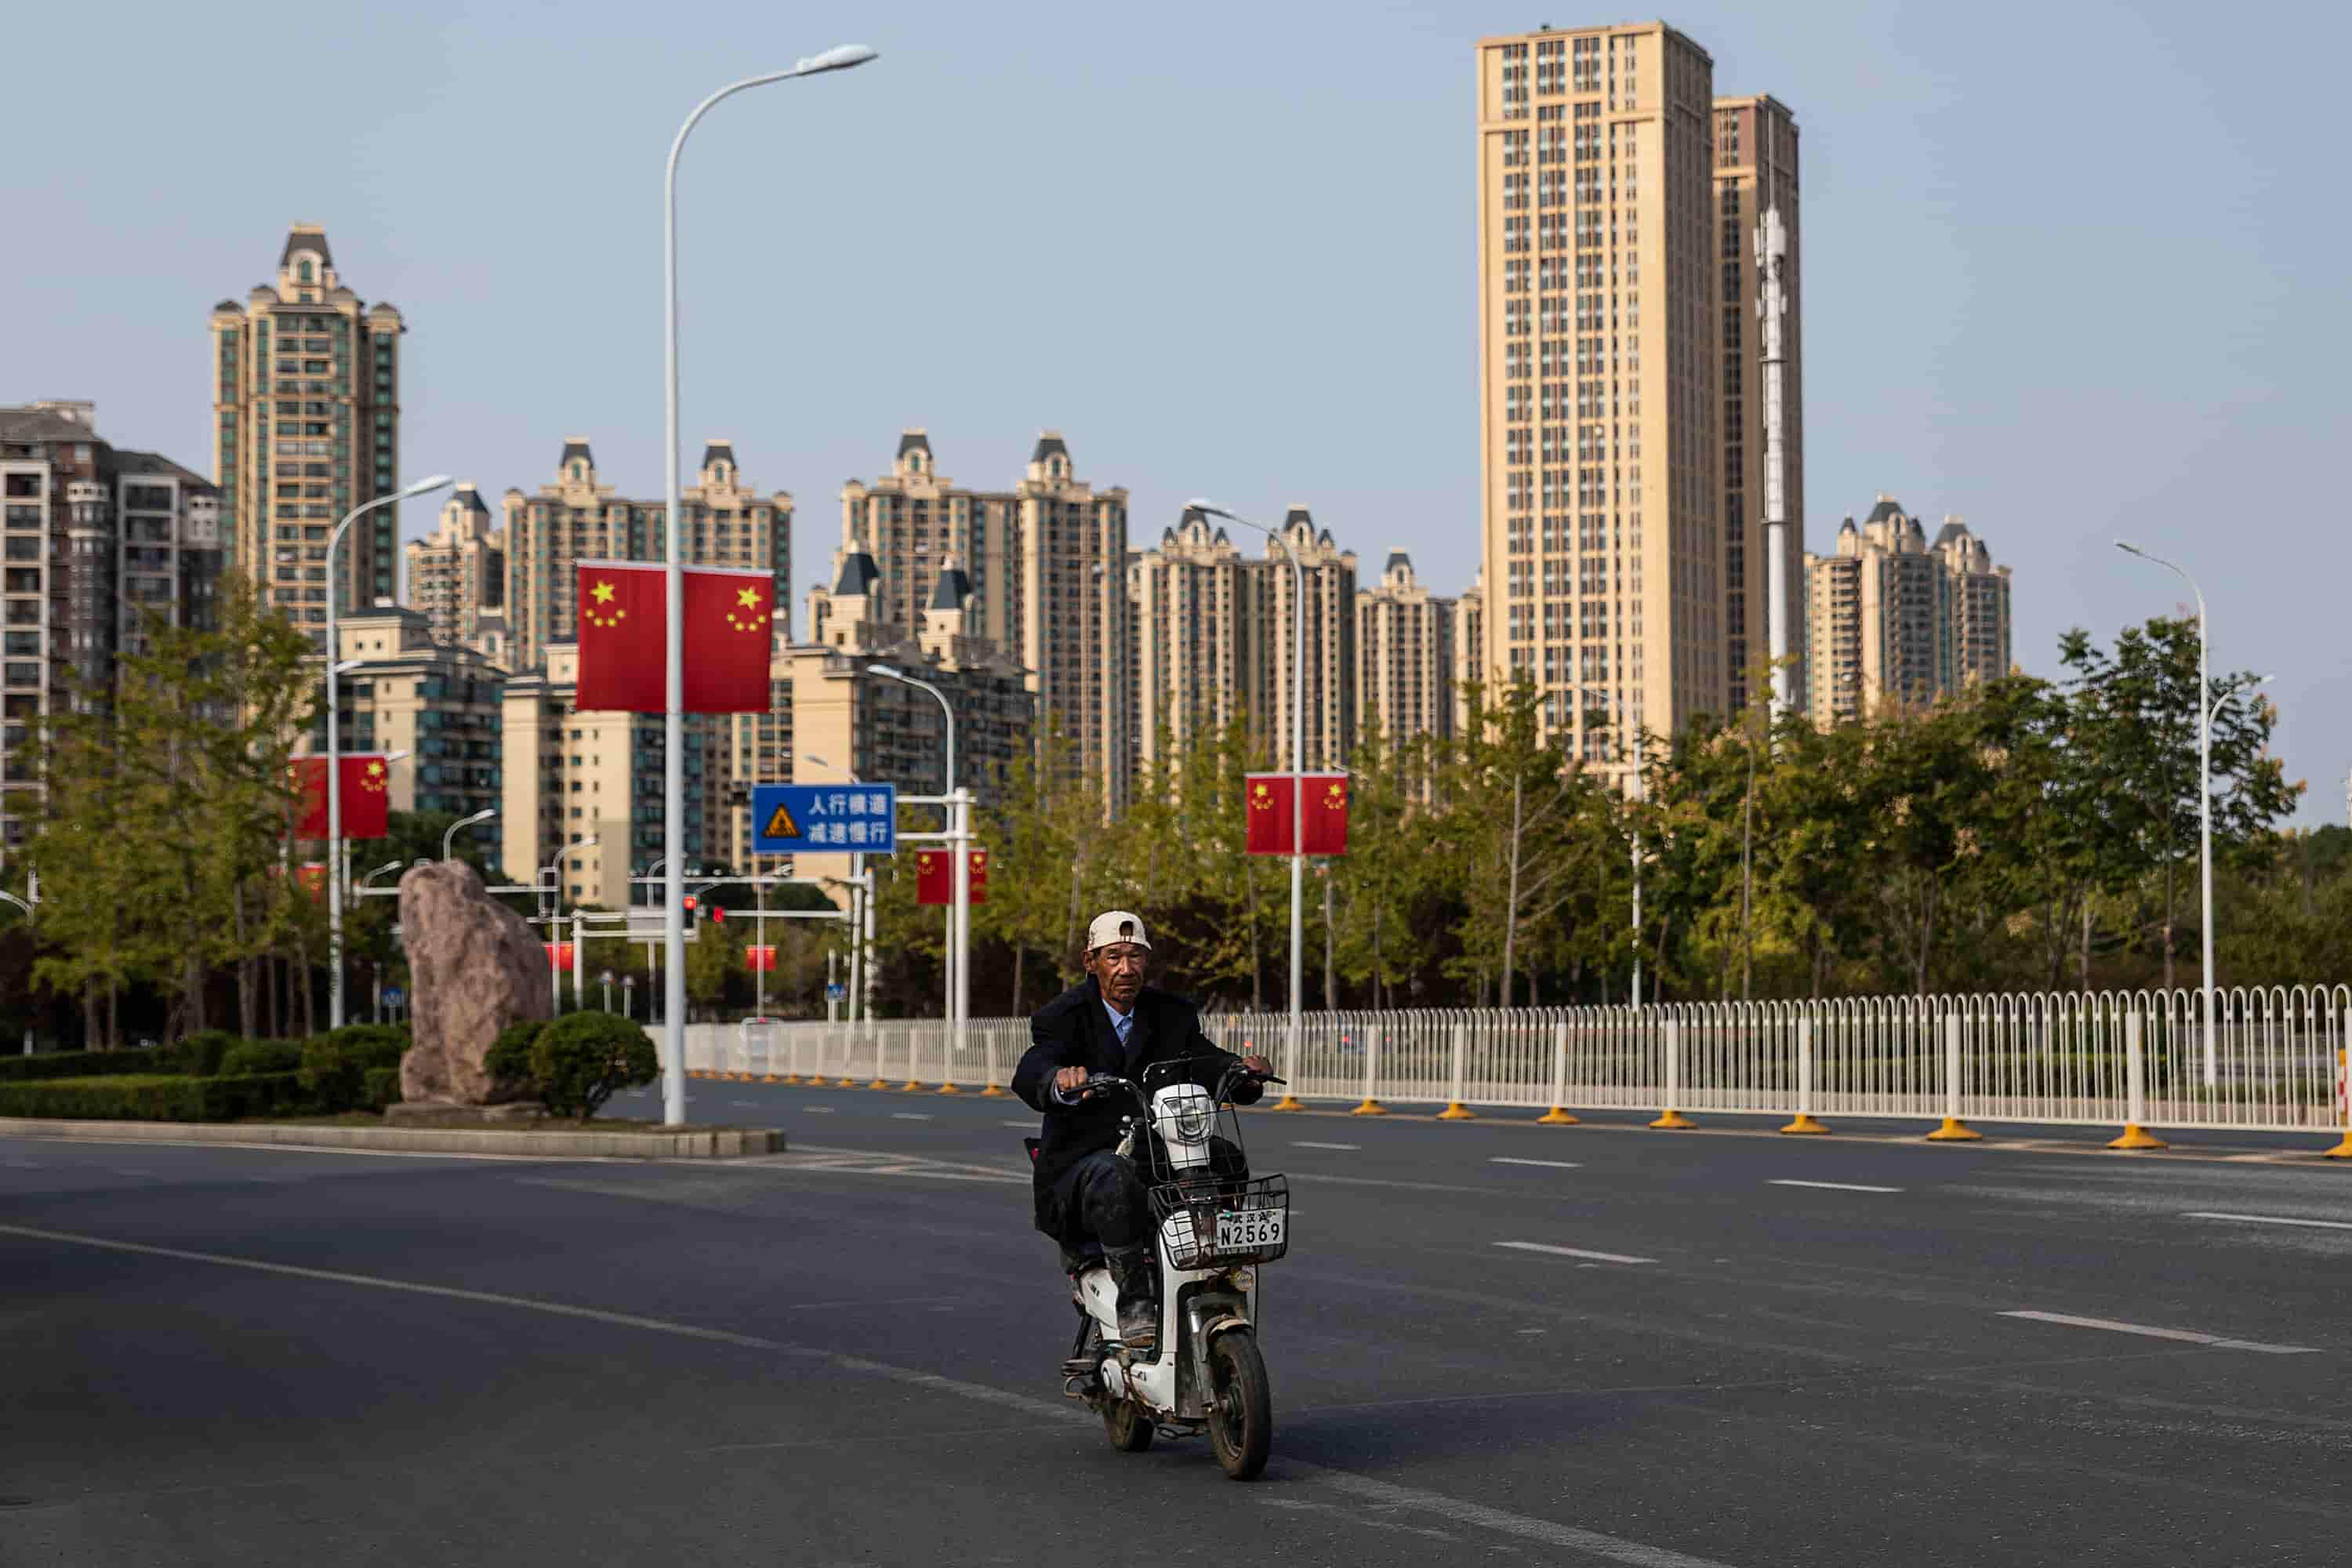 China: Evergrande Ordered to Liquidate Amid Property Crisis